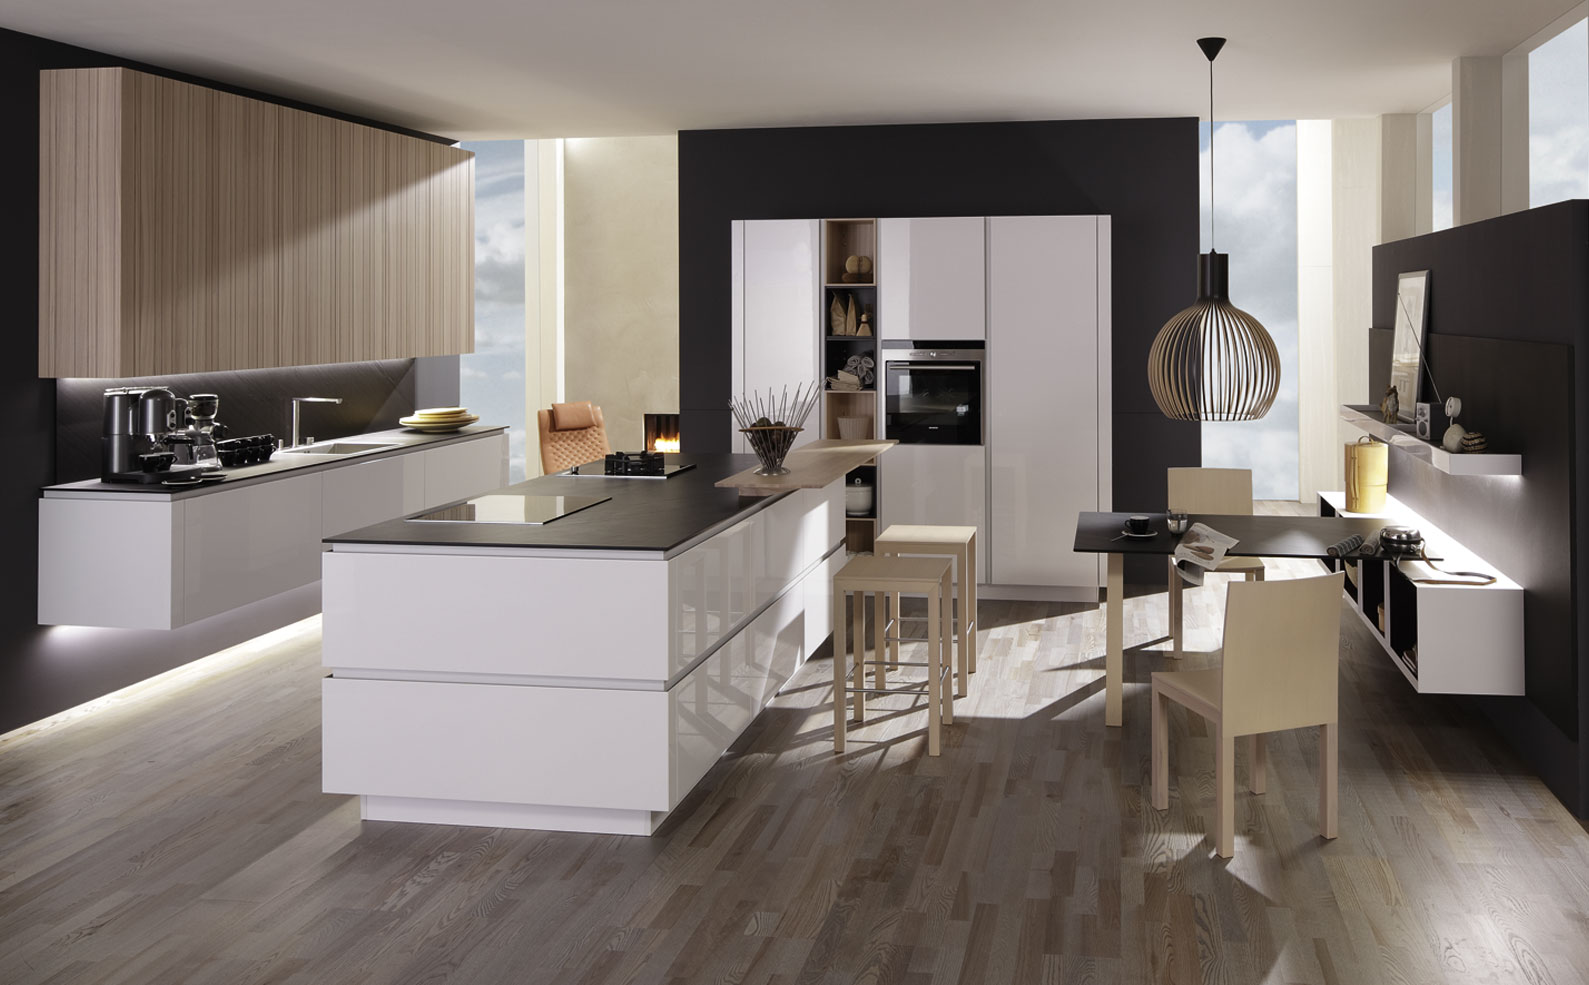 Matching modern kitchen designs from Rational | Interior Design Ideas ...